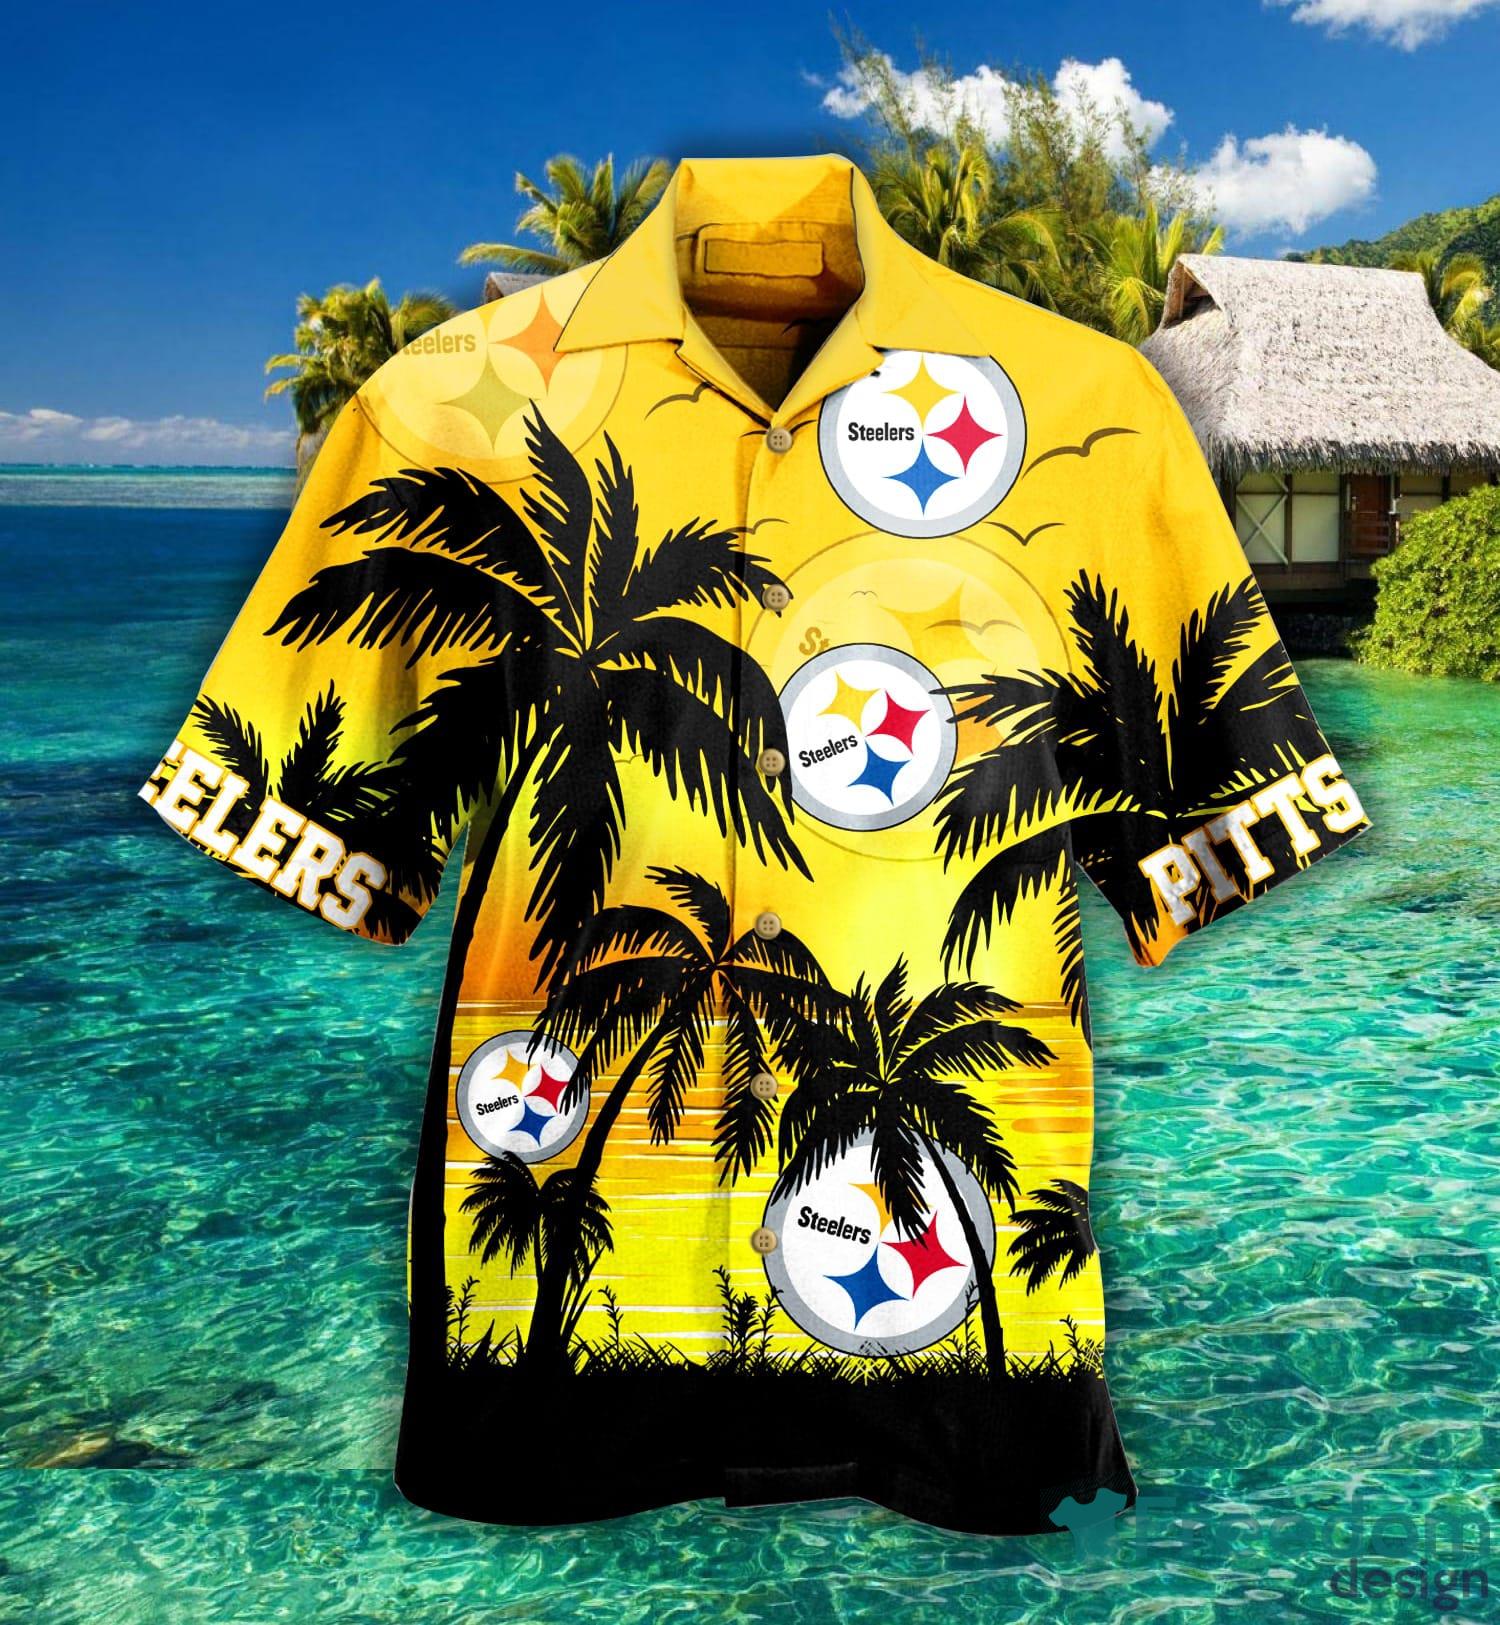 Pittsburgh Steelers Nfl Pineapple Hawaiian Shirt For Fans - Freedomdesign